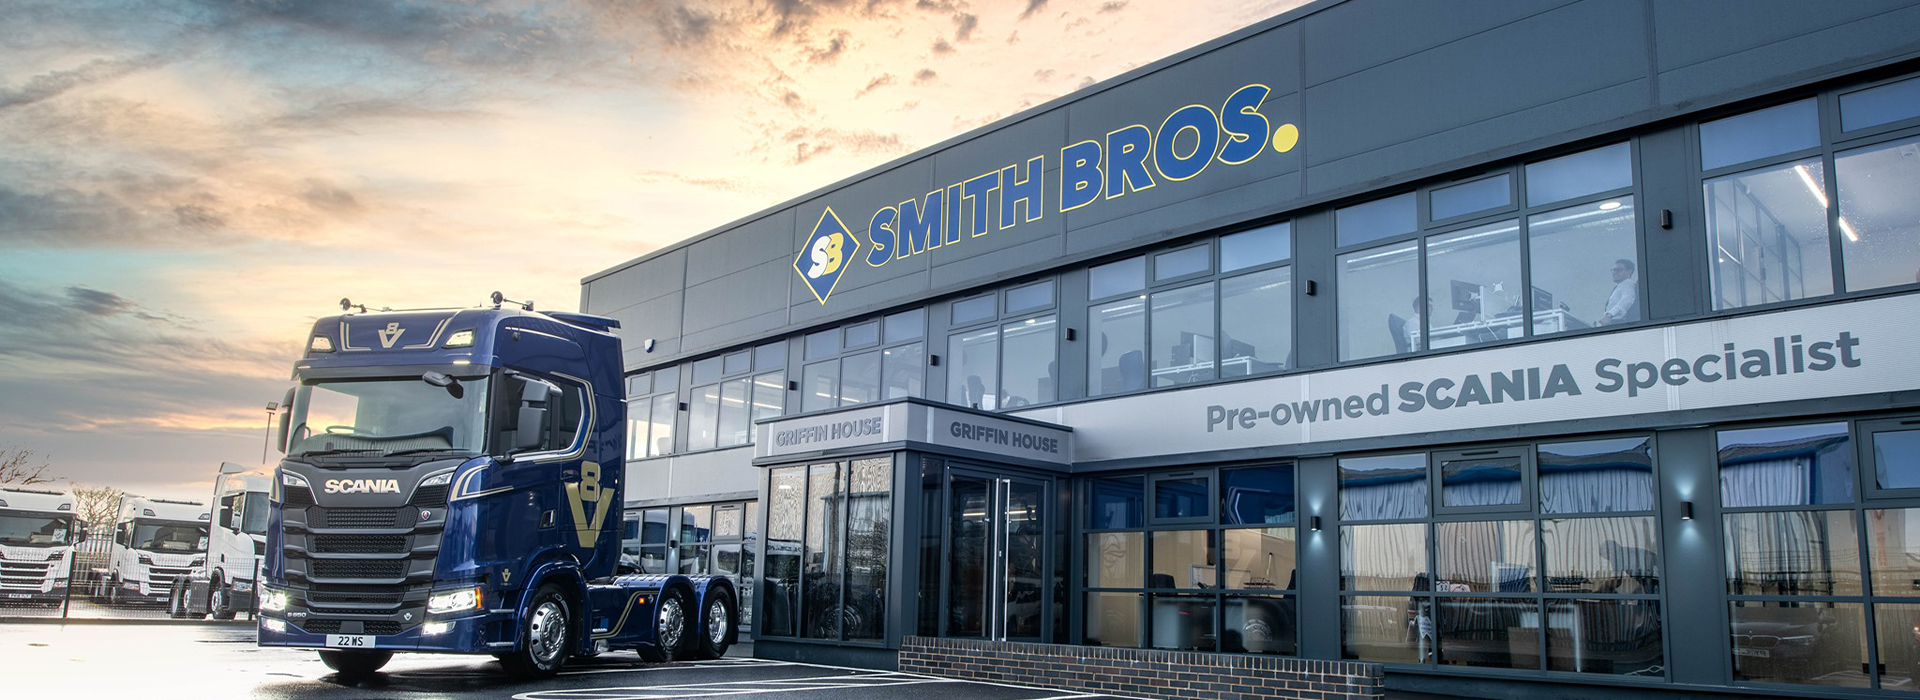 Smithbros dealership